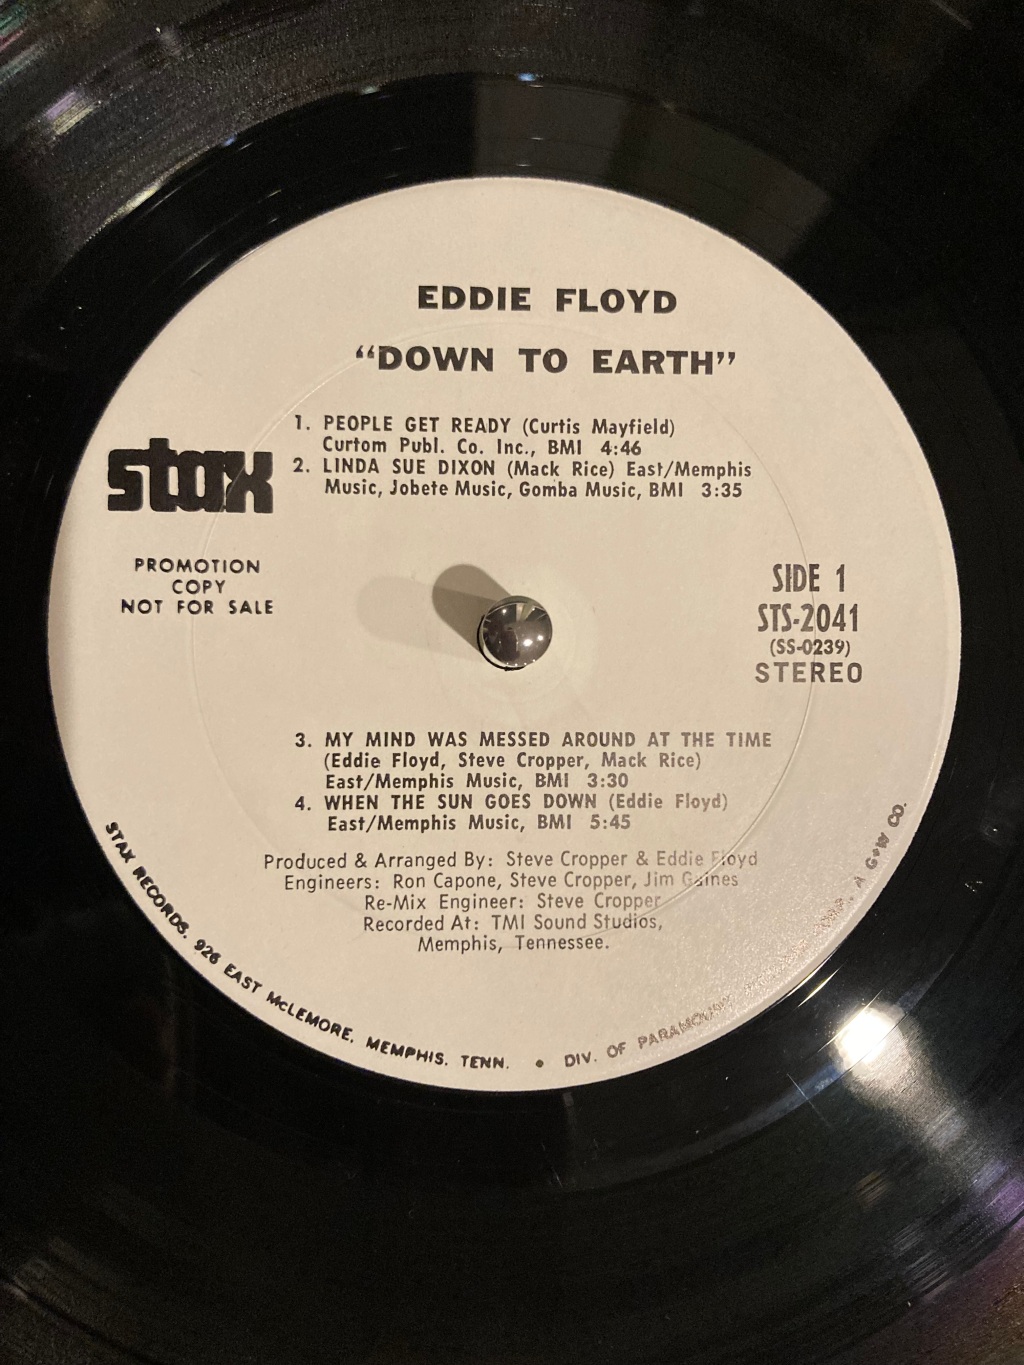 Eddie Floyd’s “Down to Earth”